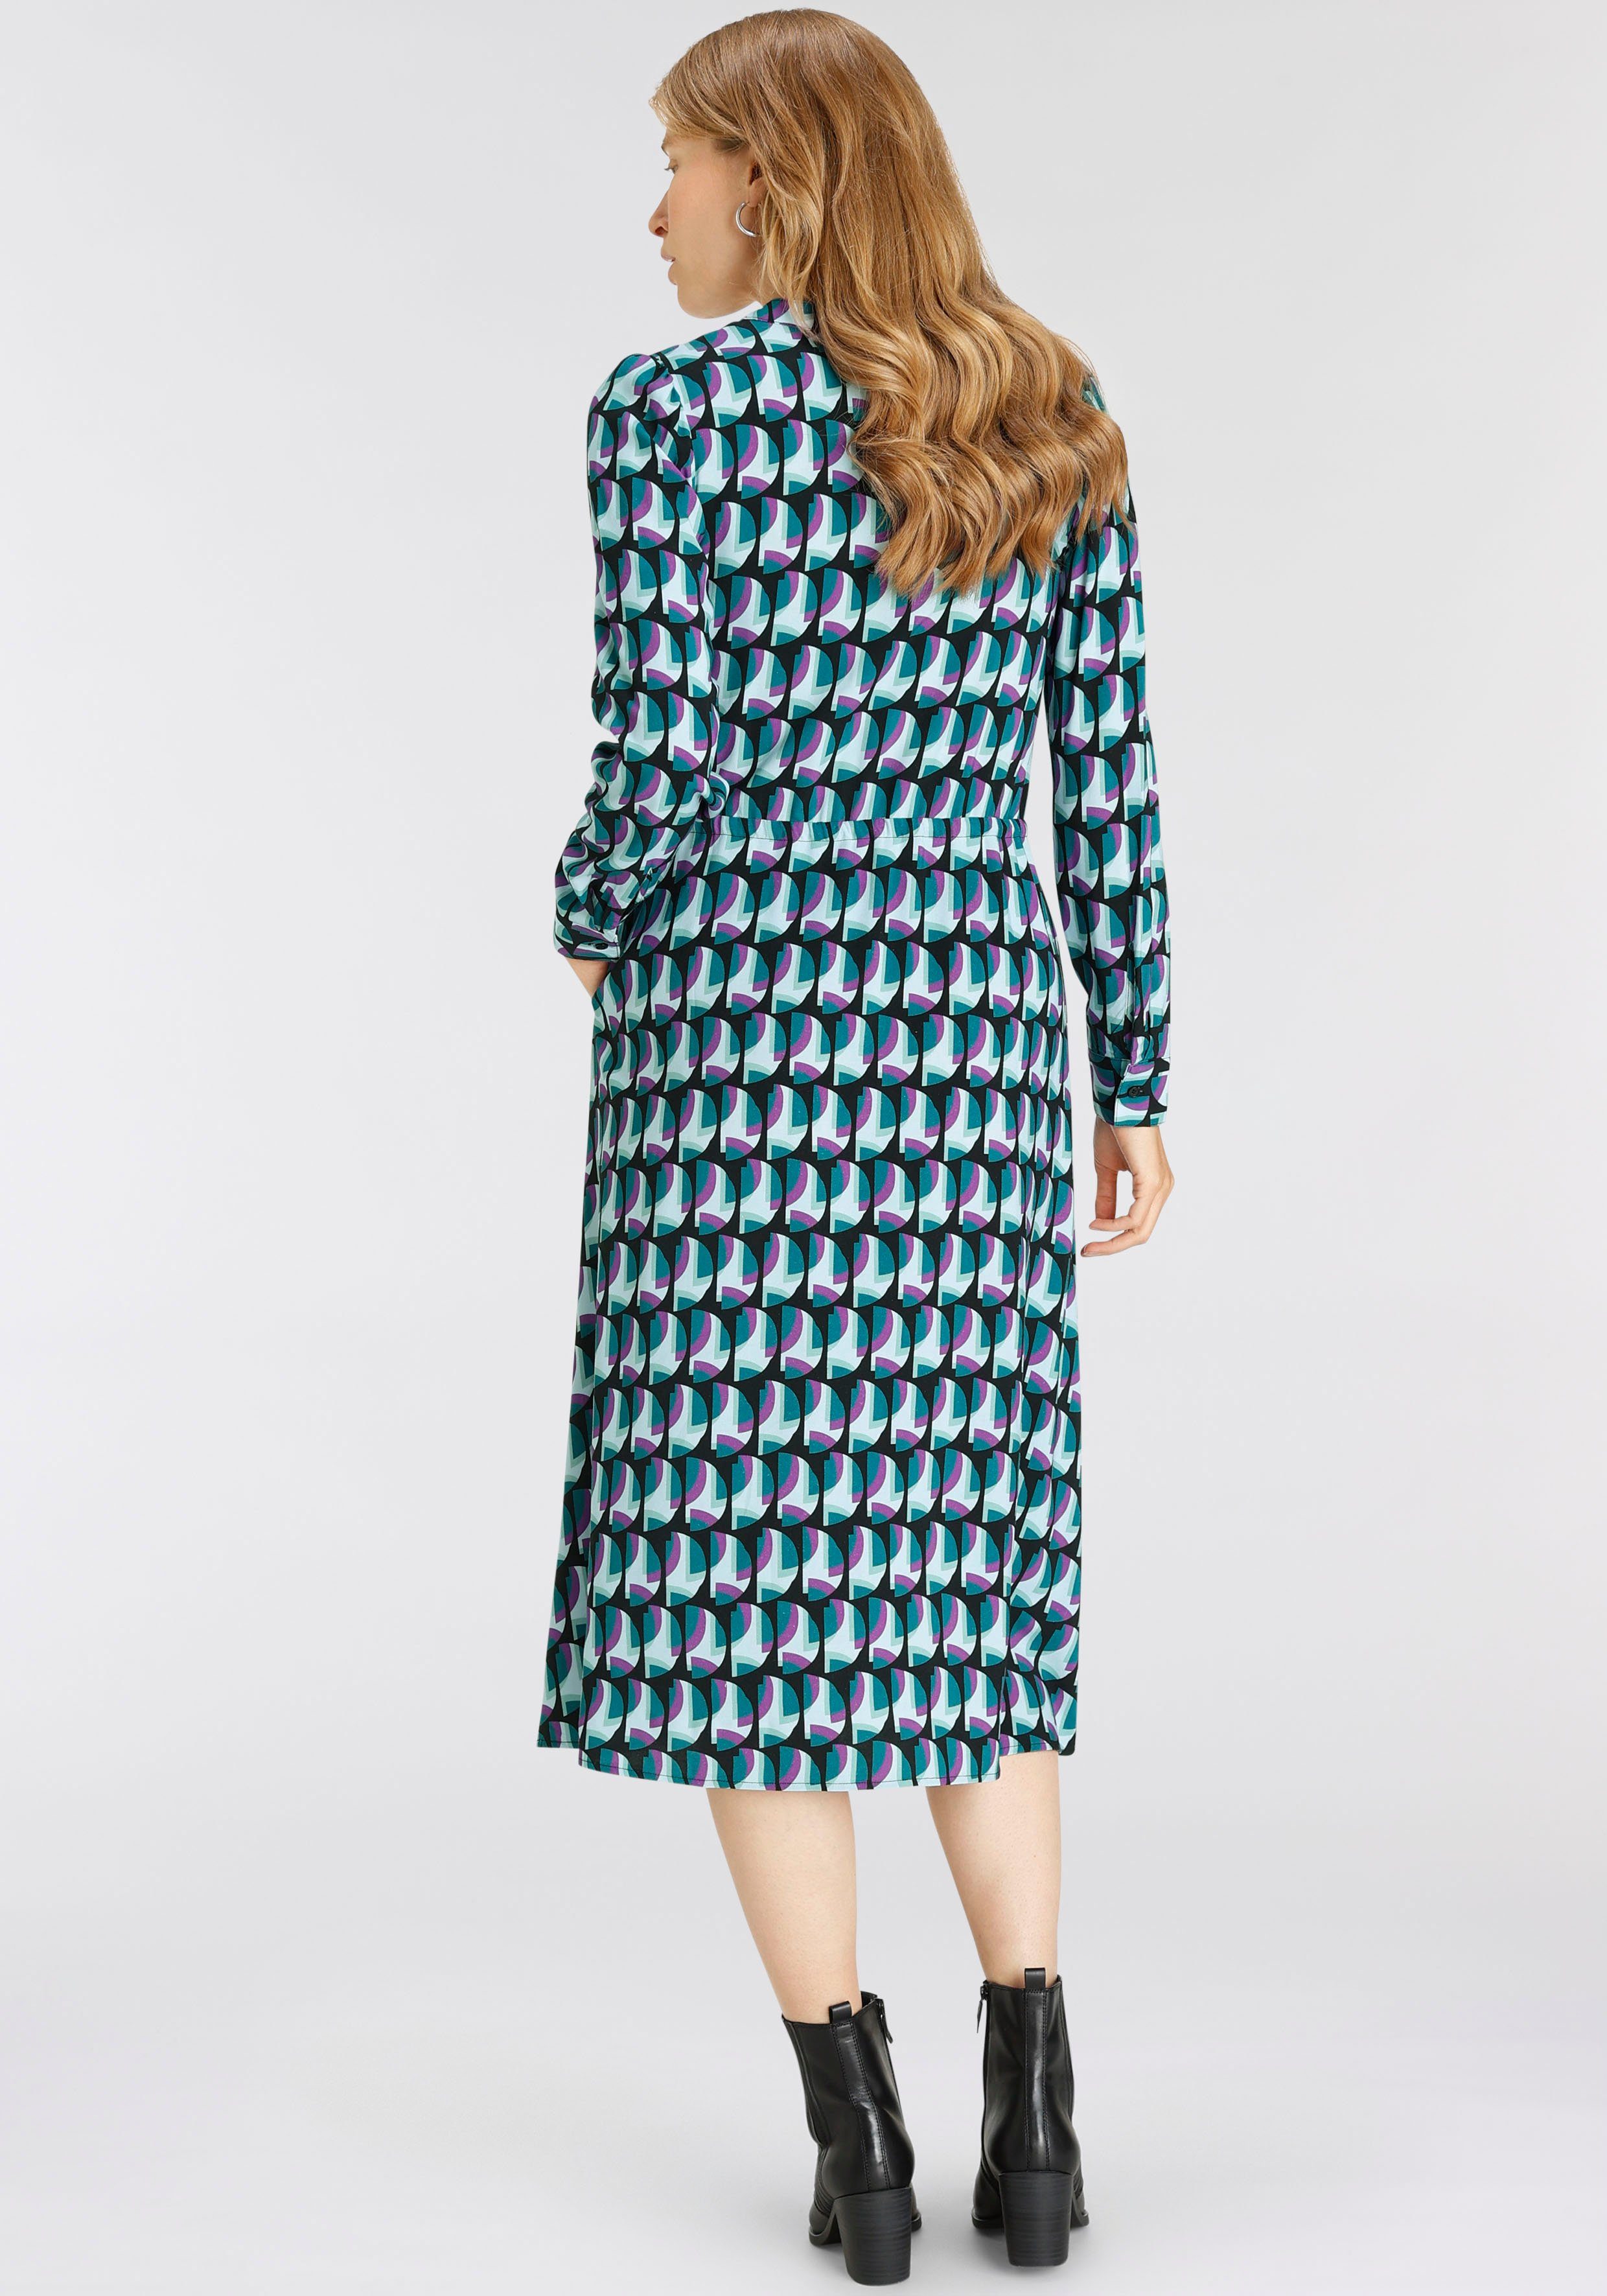 elegantem Allover-Print Hemdblusenkleid mit PARIS HECHTER